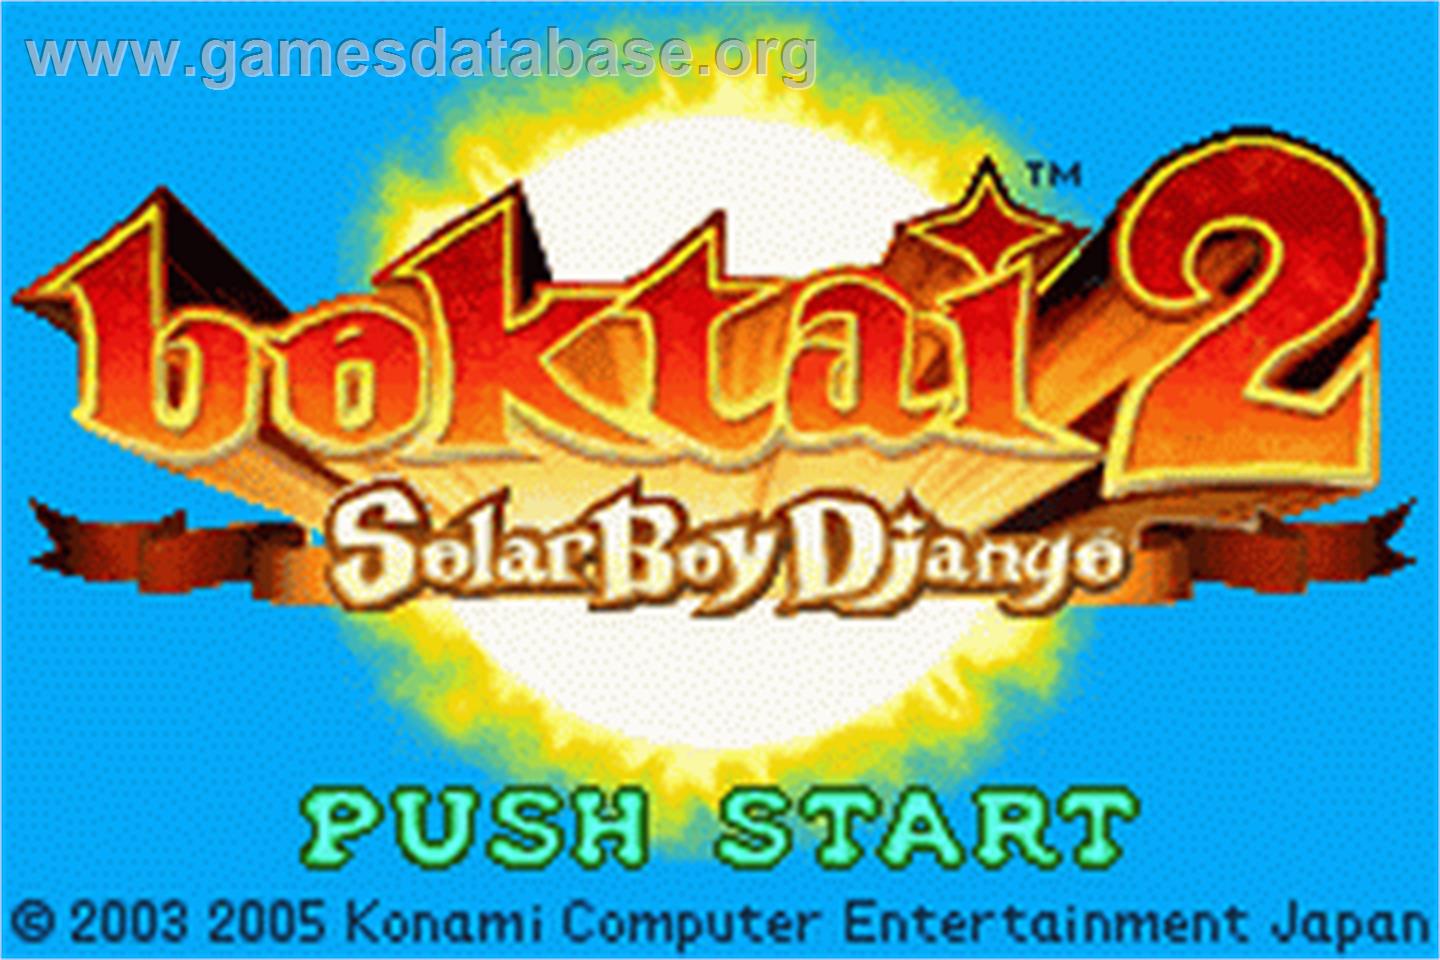 Boktai 2: Solar Boy Django - Nintendo Game Boy Advance - Artwork - Title Screen